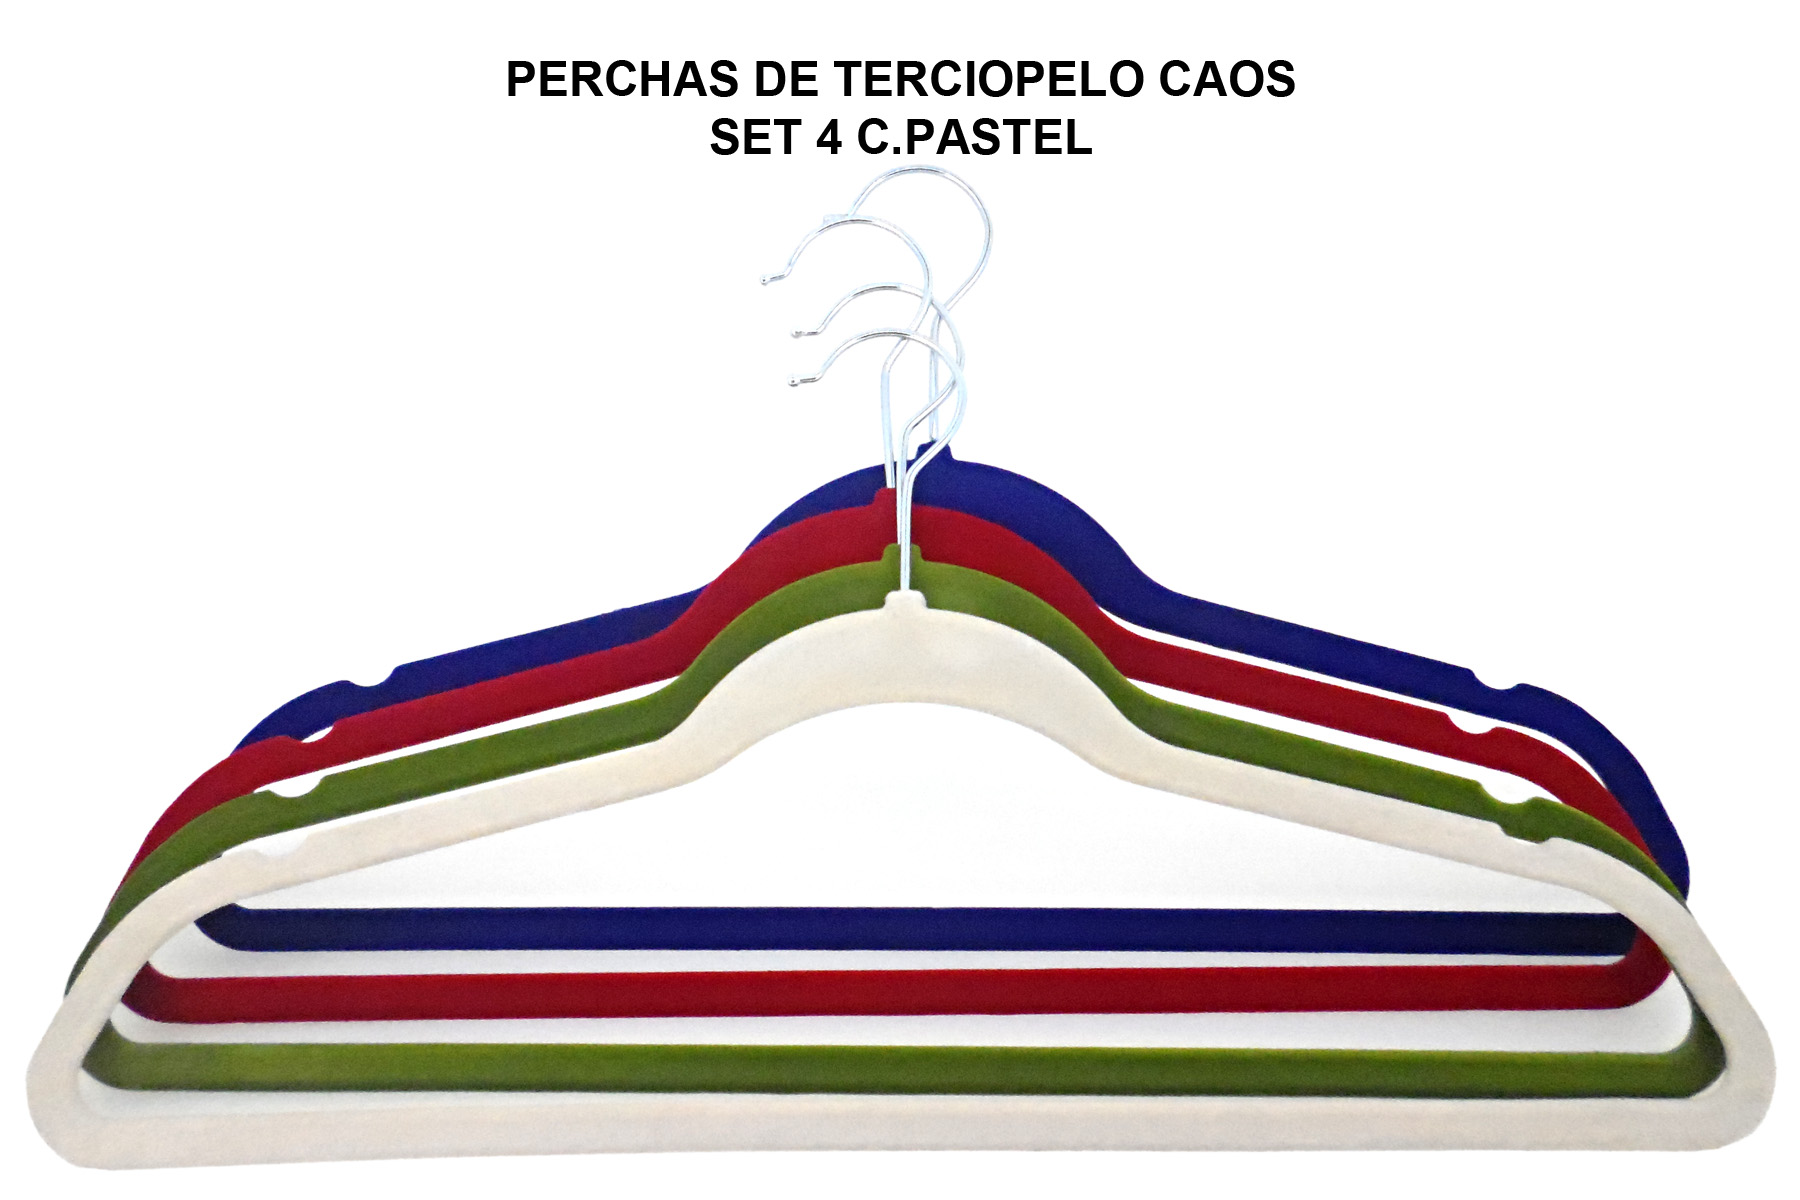 PERCHAS DE TERCIOPELO CAOS SET 4 C.PASTEL